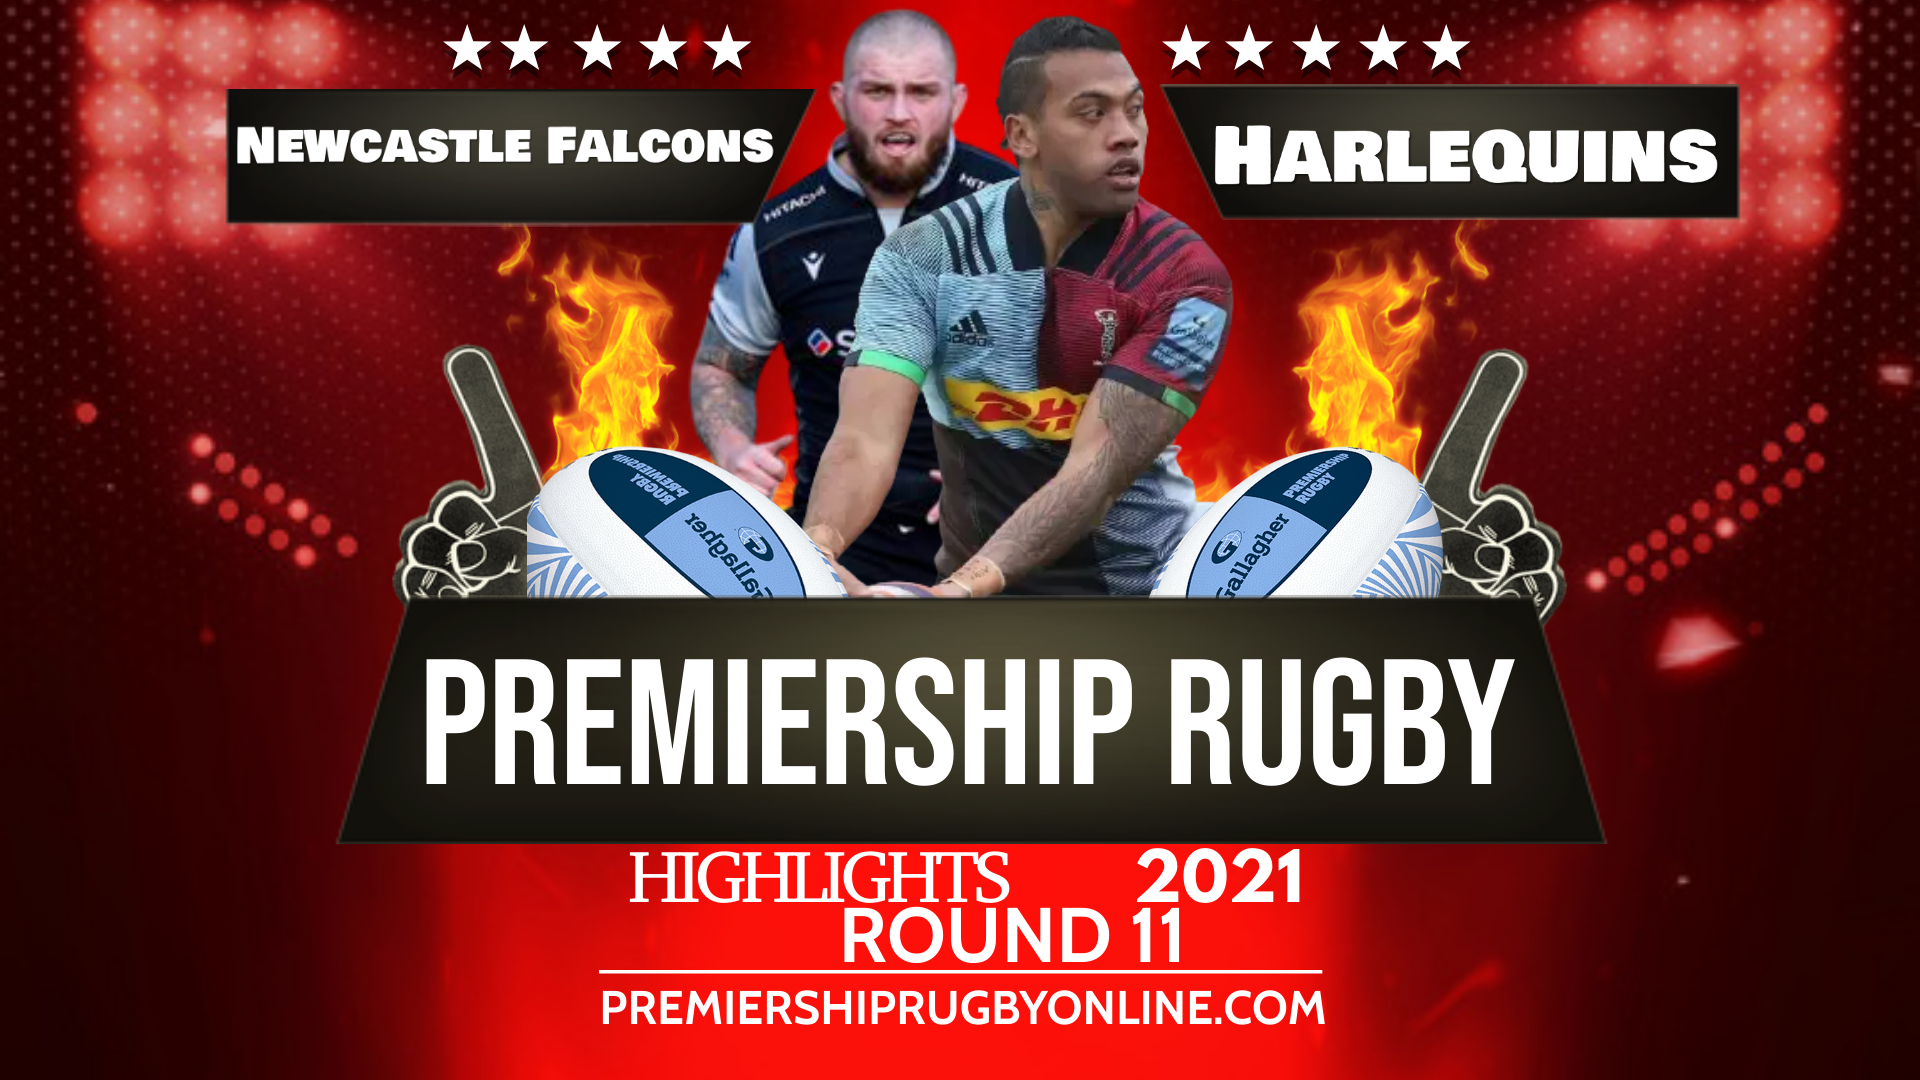 Newcastle Falcons Vs Harlequins Highlights 2021 RD 11